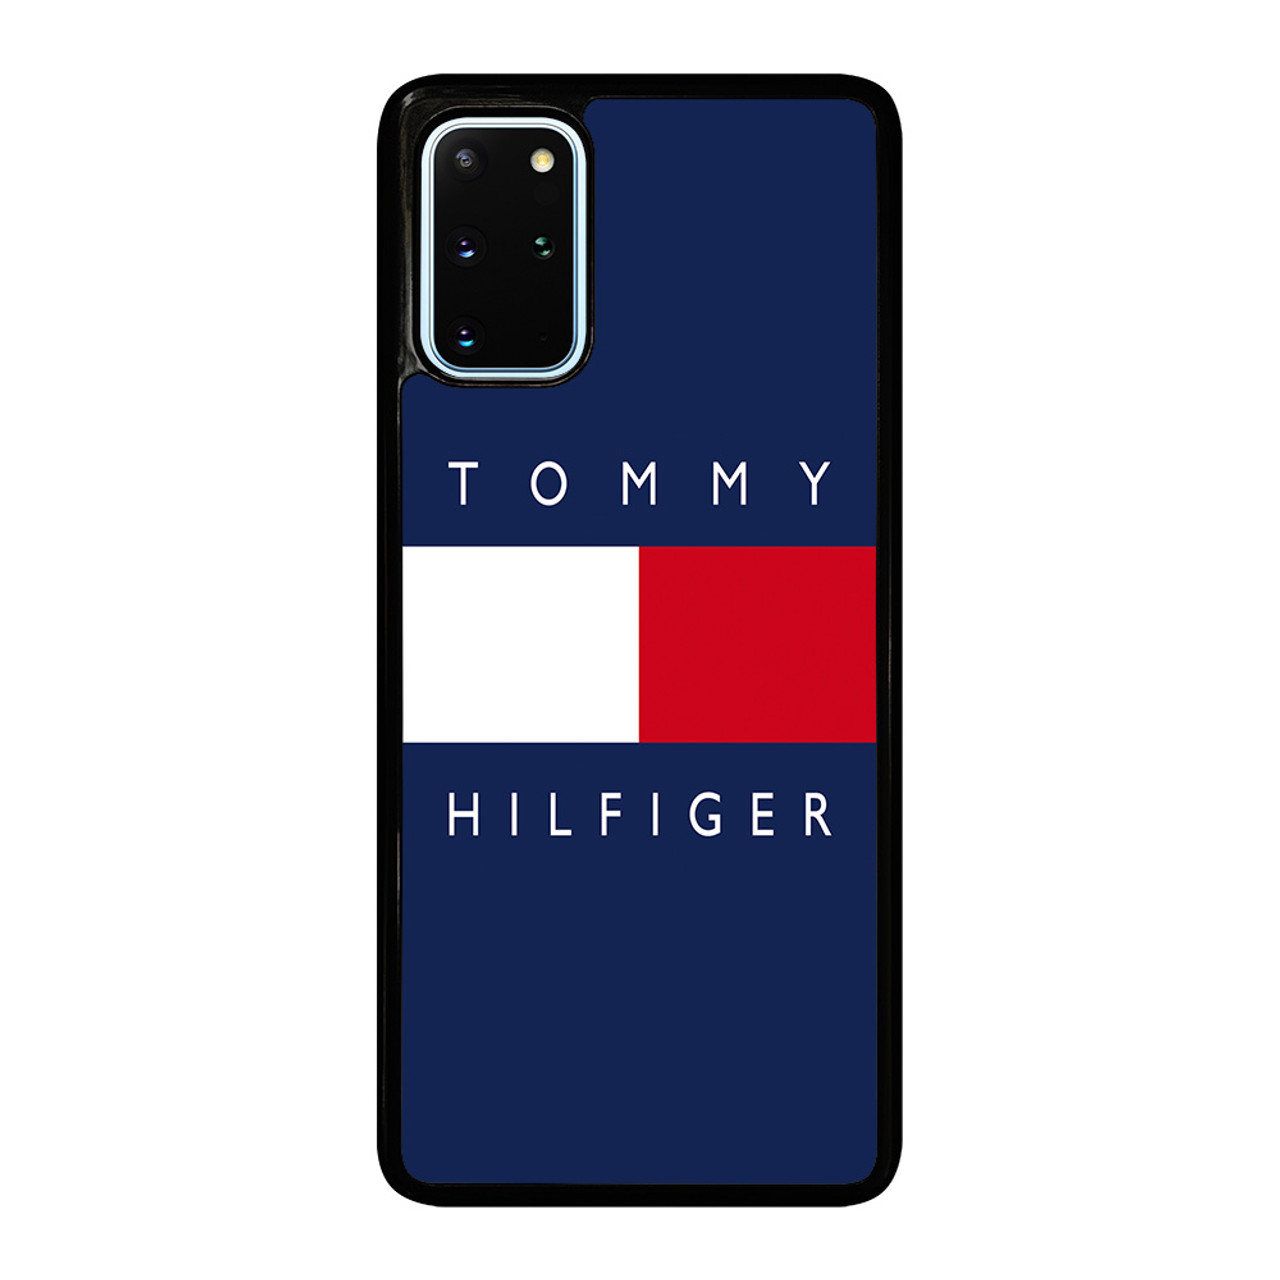 TOMMY Galaxy S20 Plus Case